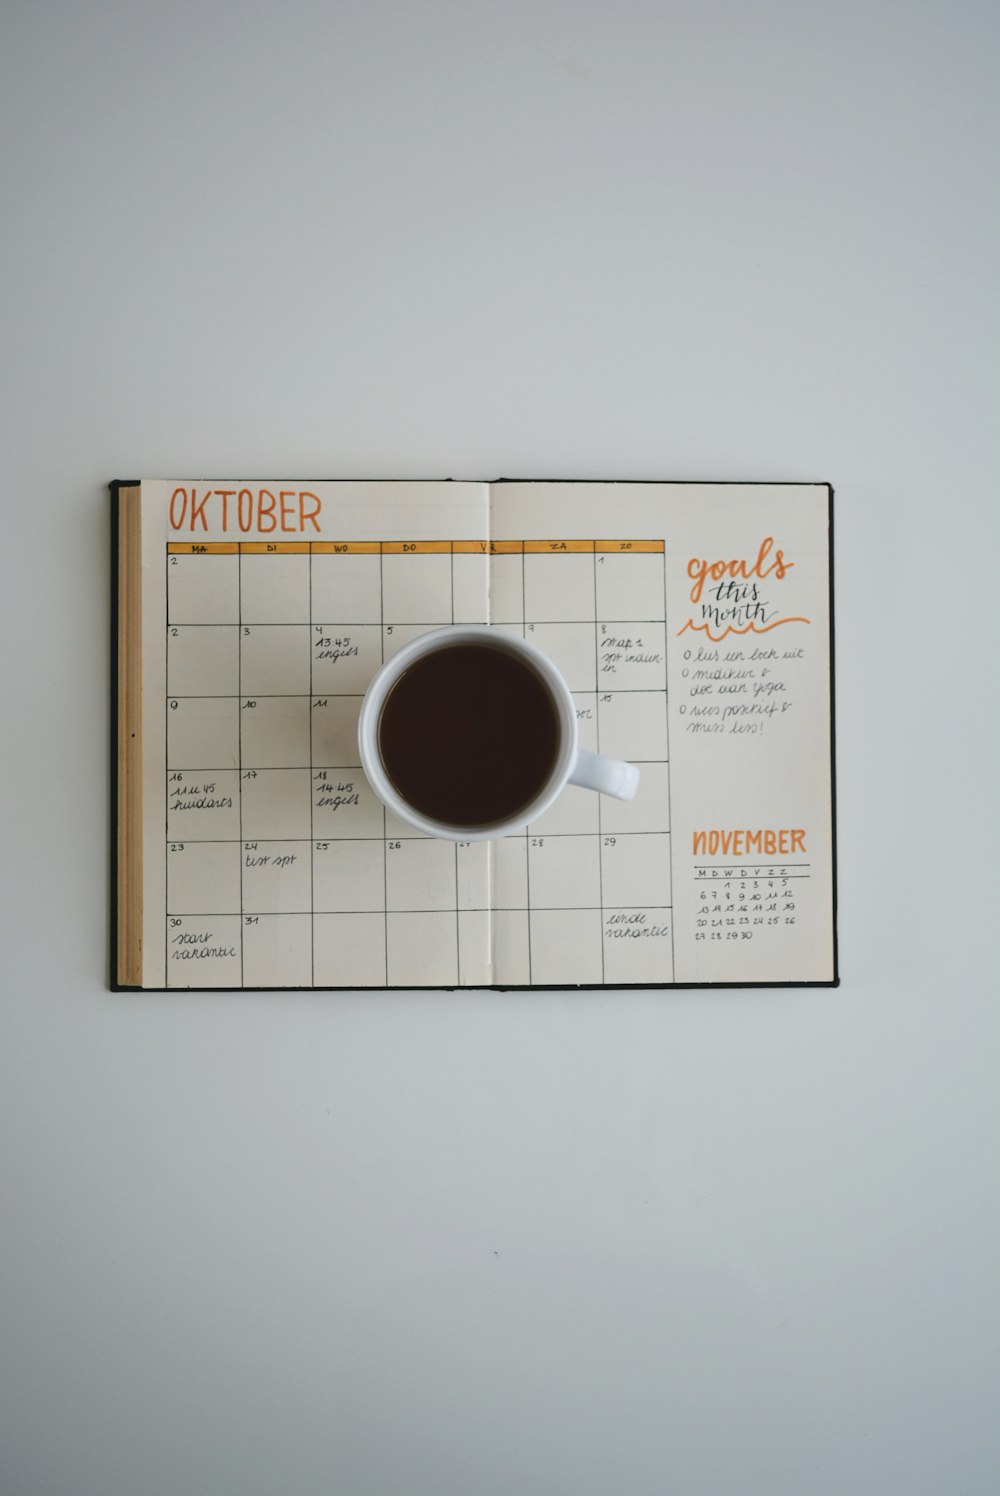 white coffee mug on calendar at october